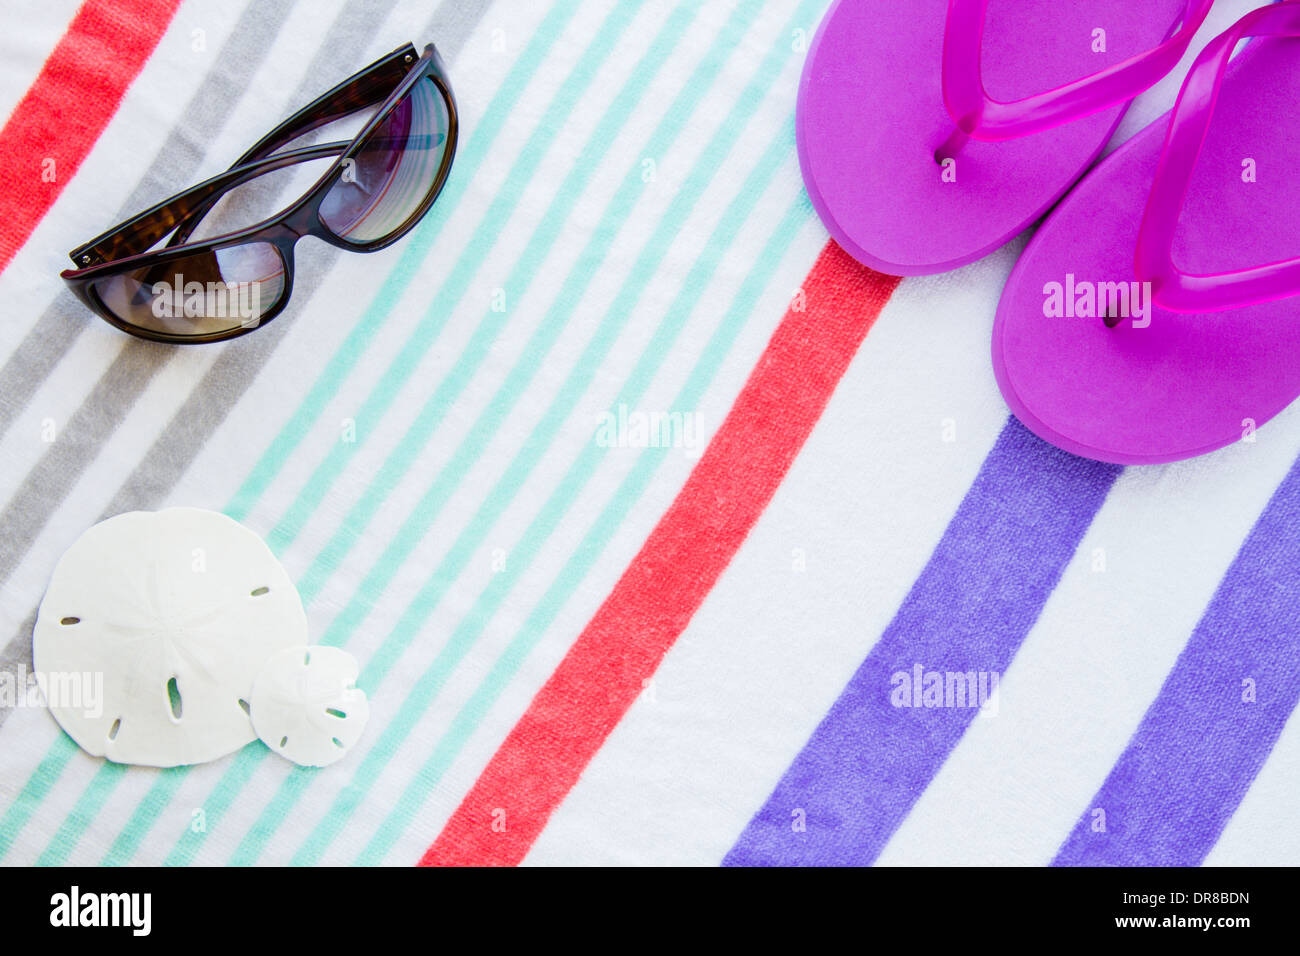 Beach scene with purple flip flops,sand dollars and sunglasses on a striped beach towel. Stock Photo